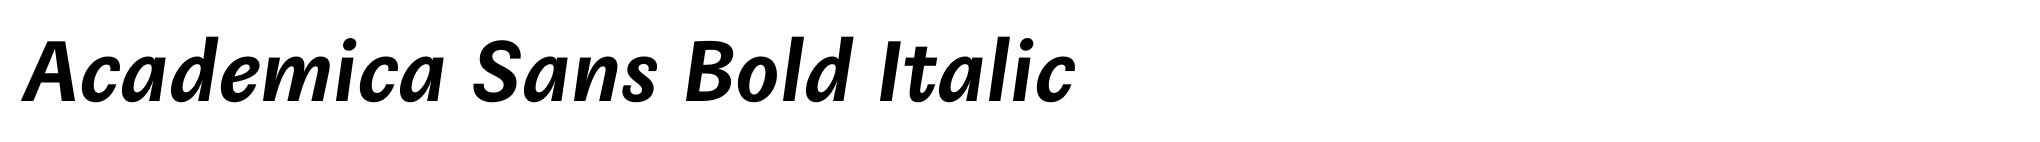 Academica Sans Bold Italic image